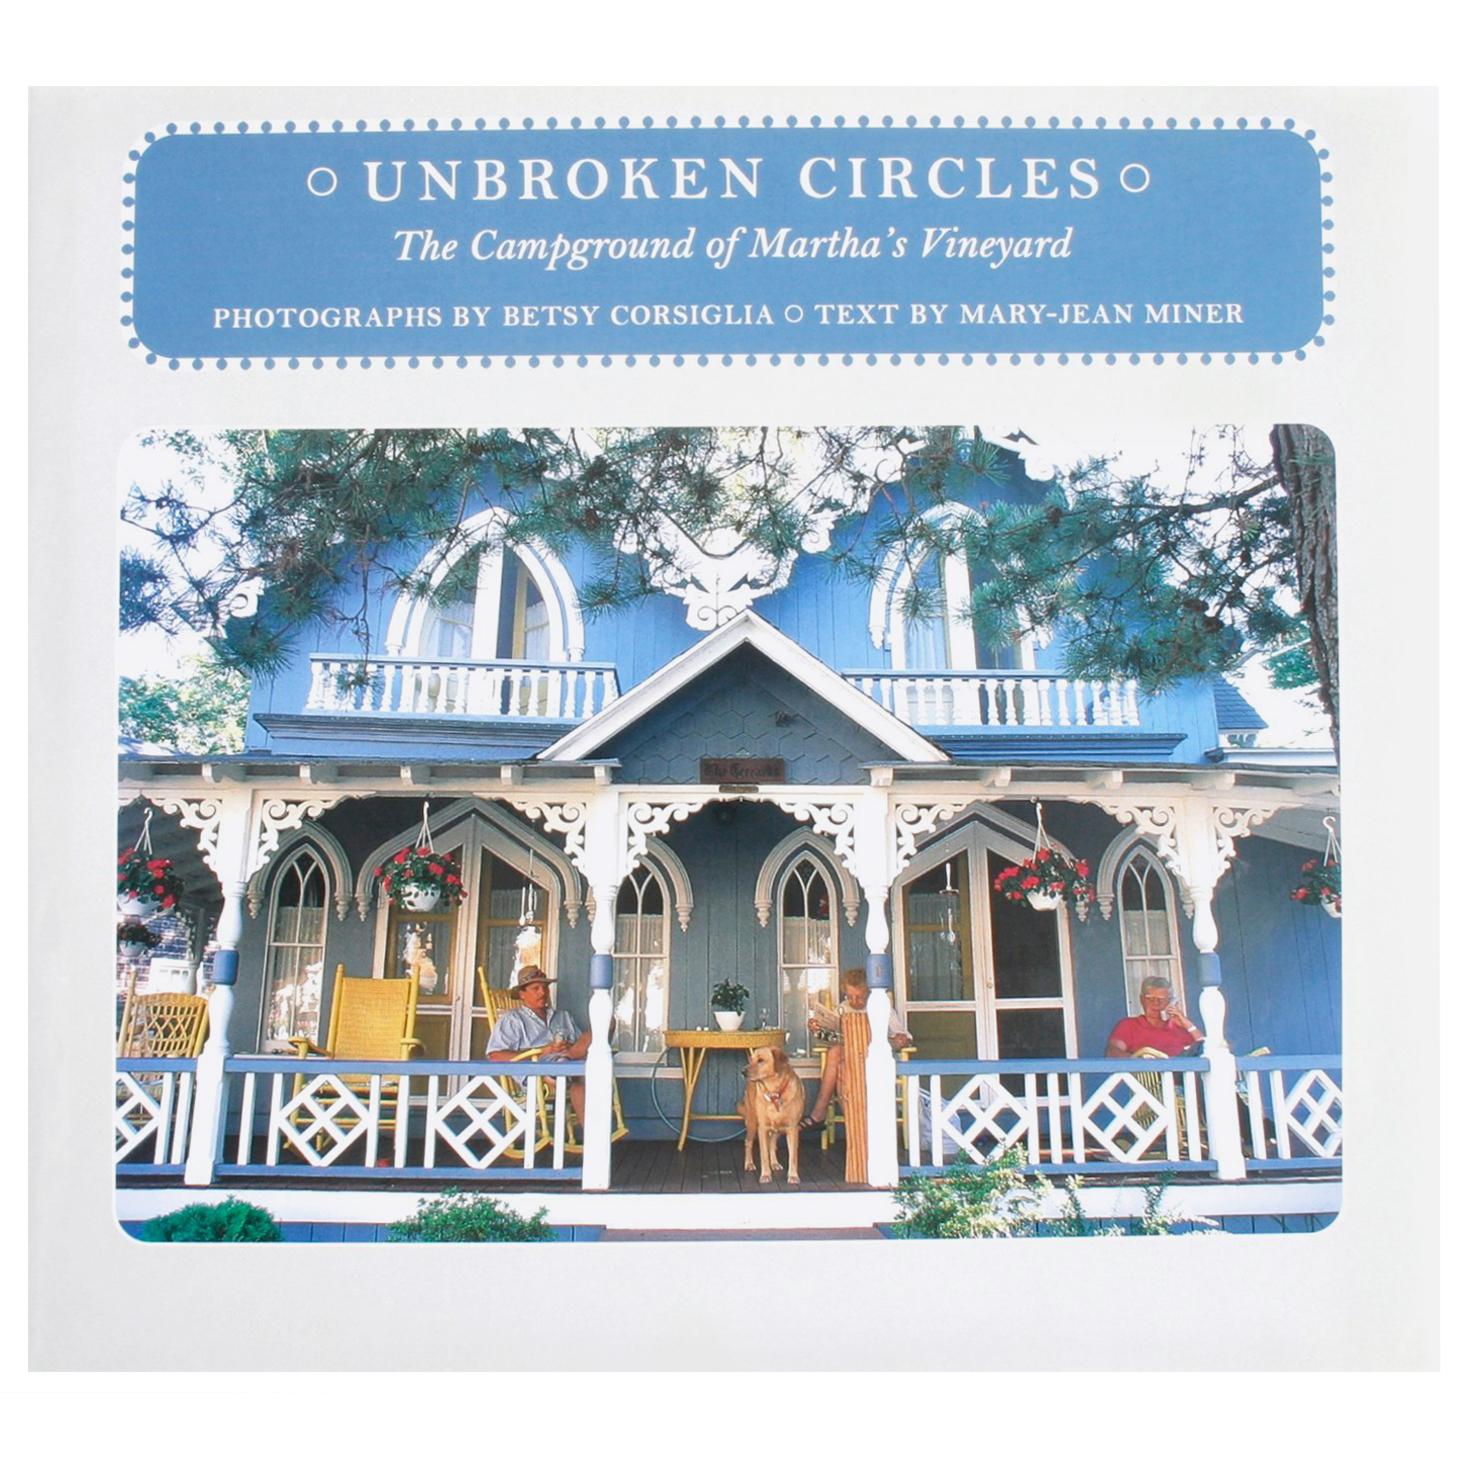 « Unbroken Circles The Campground of Martha's Vineyard » (Les cercles ininterrompus du champ de Martha) signé Mary-Jean Miner